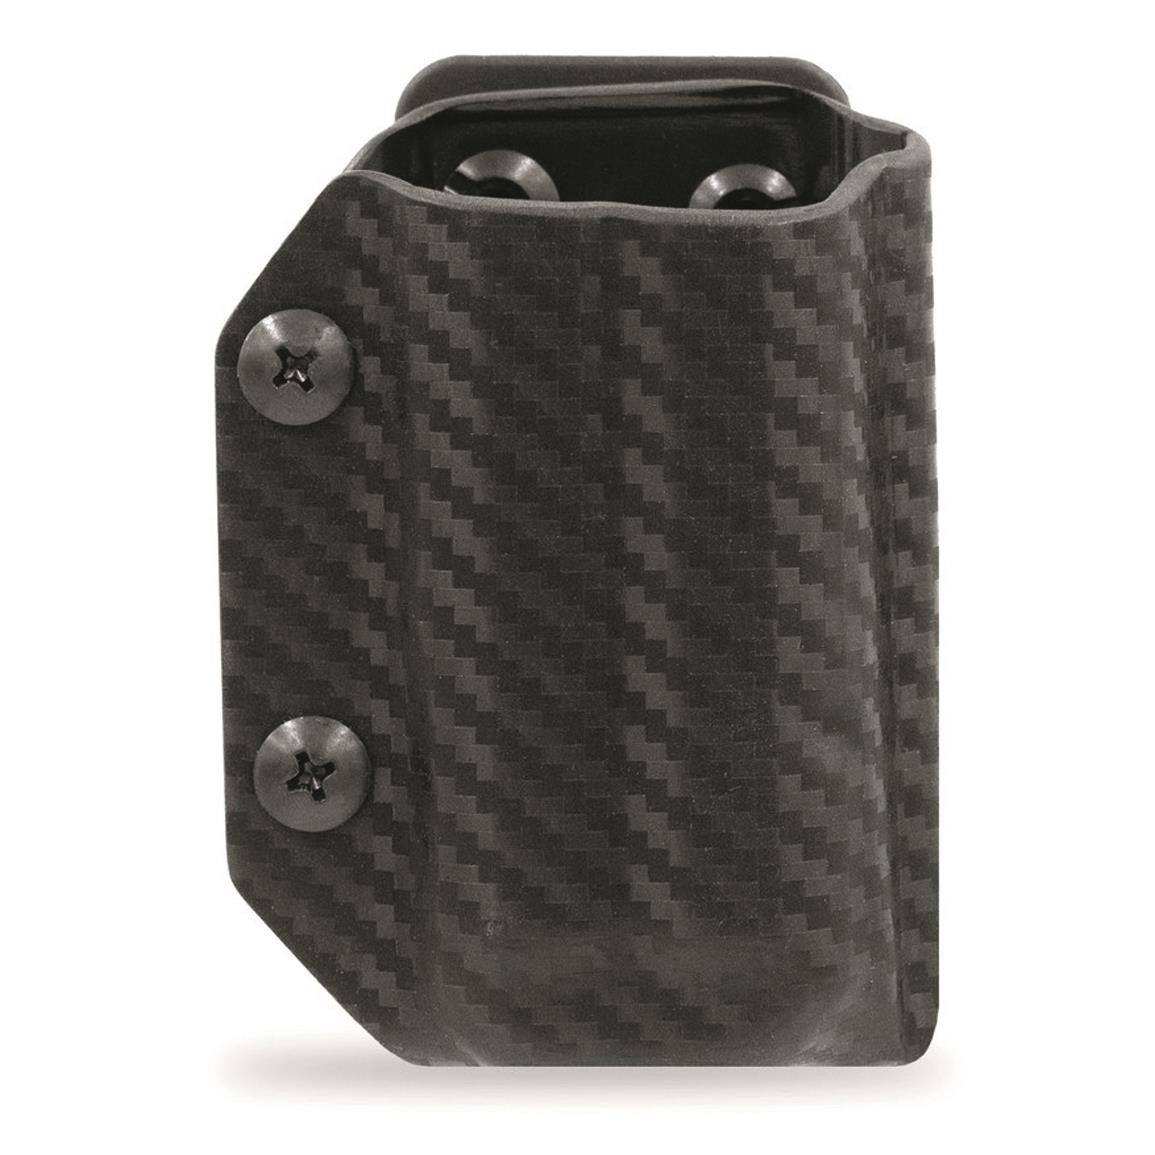 Clip & Carry Kydex Sheath for Leatherman Wave/Wave+, Carbon Fiber Black